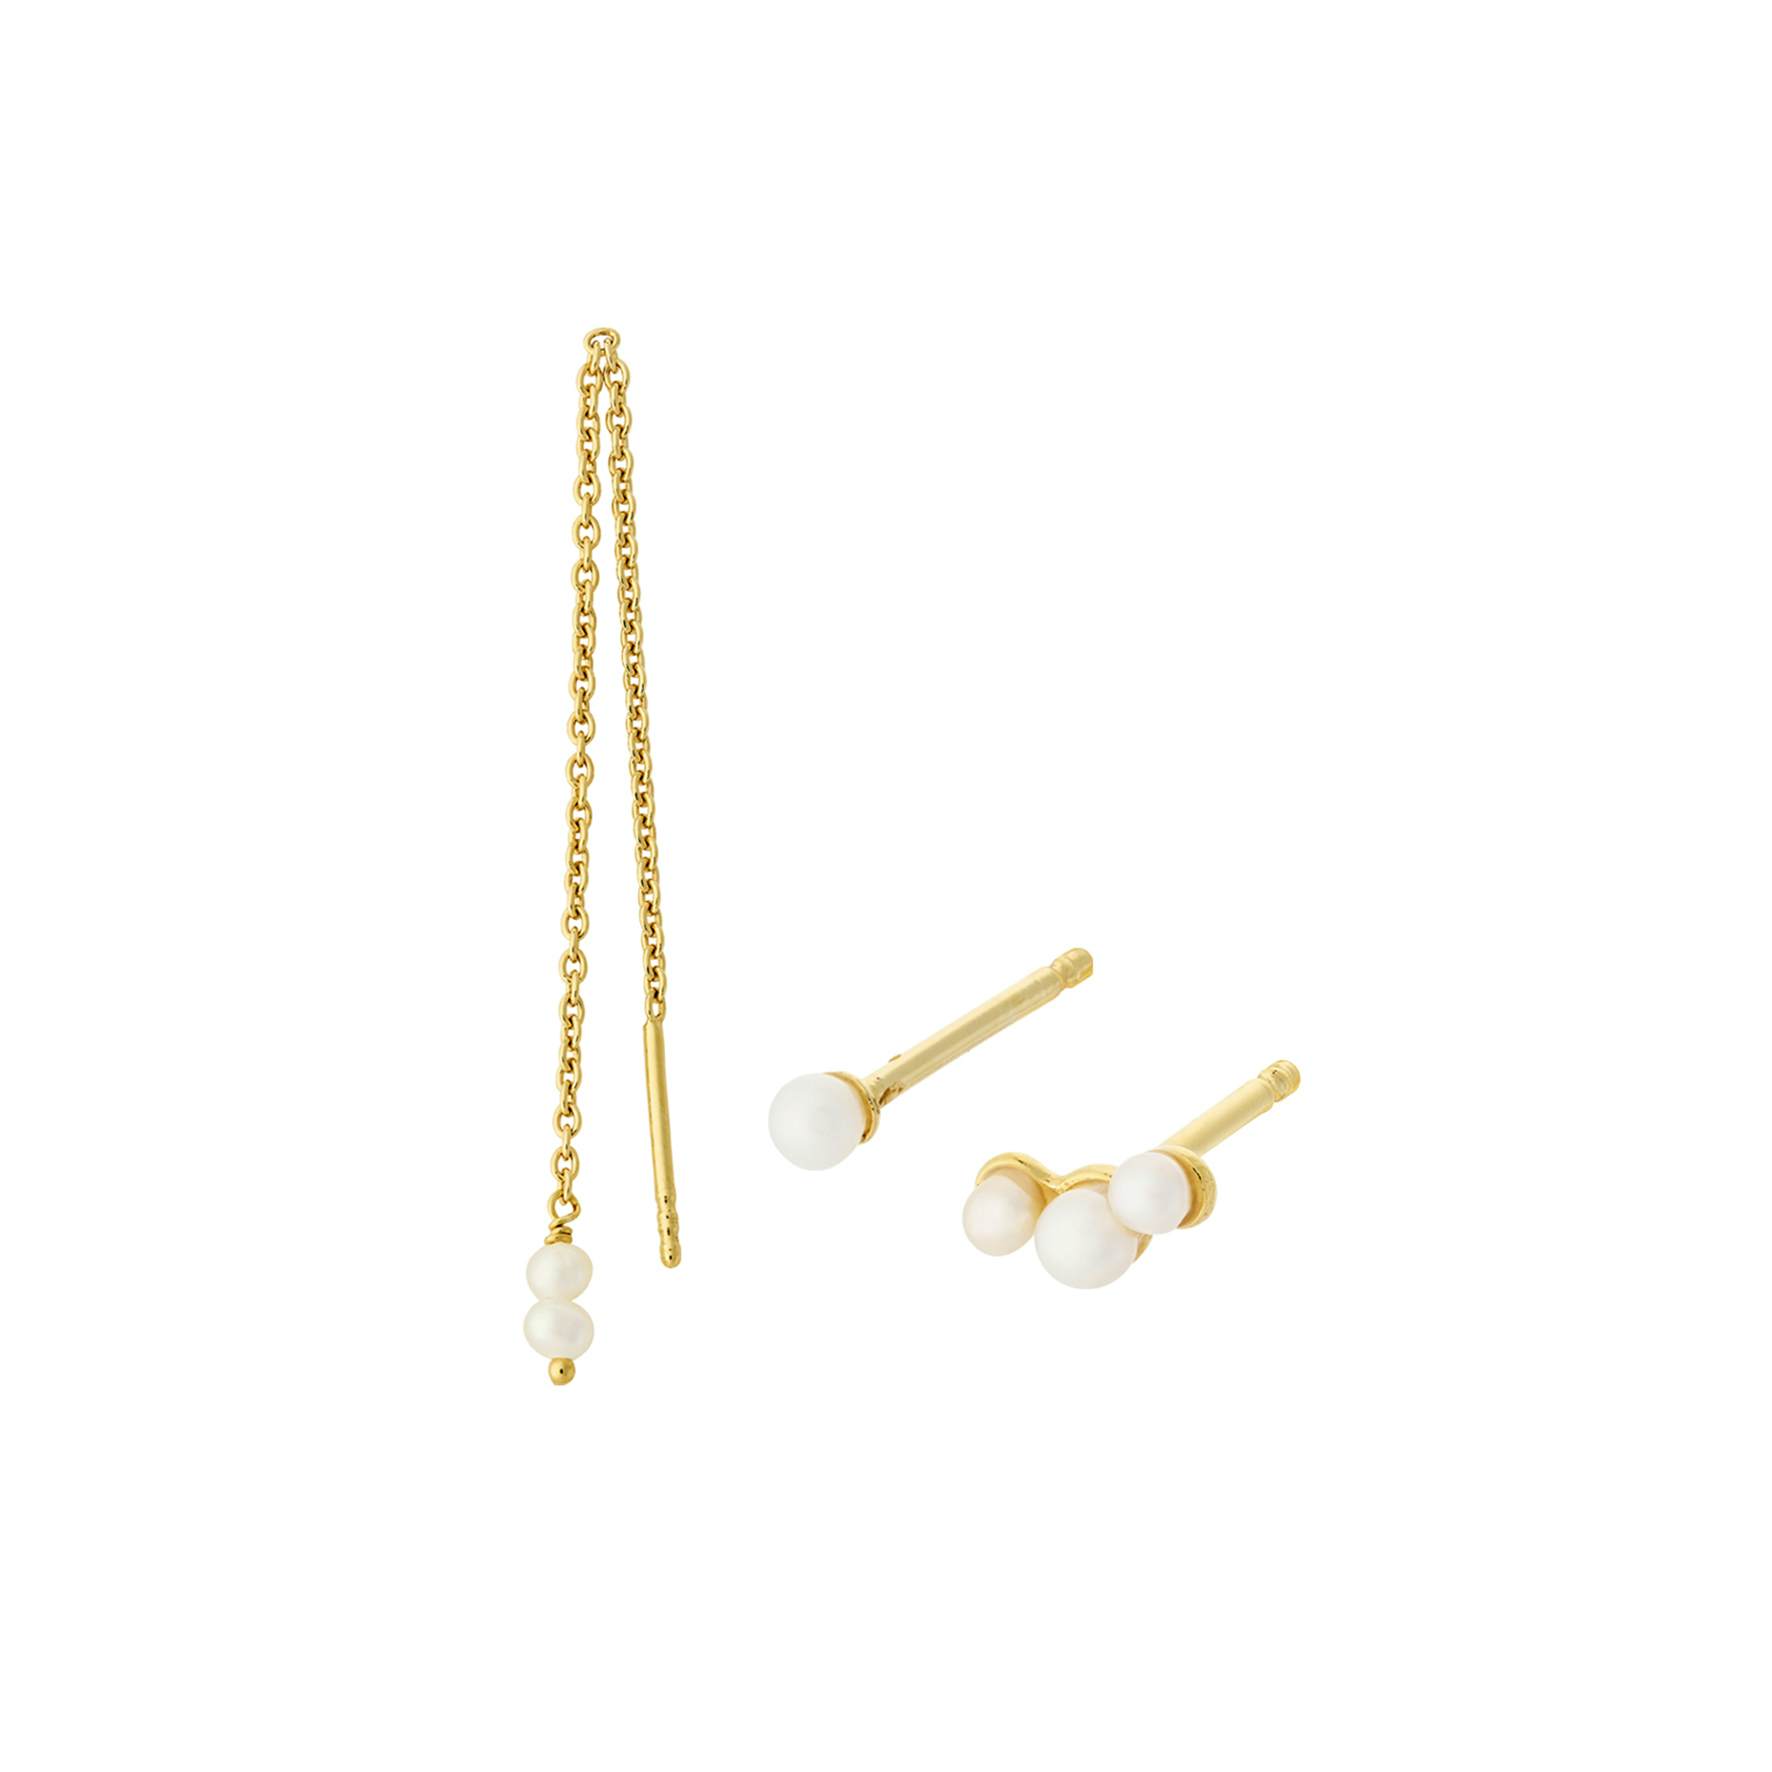 Ocean Pearl Earring Box von Pernille Corydon in Vergoldet-Silber Sterling 925|Freshwater Pearl